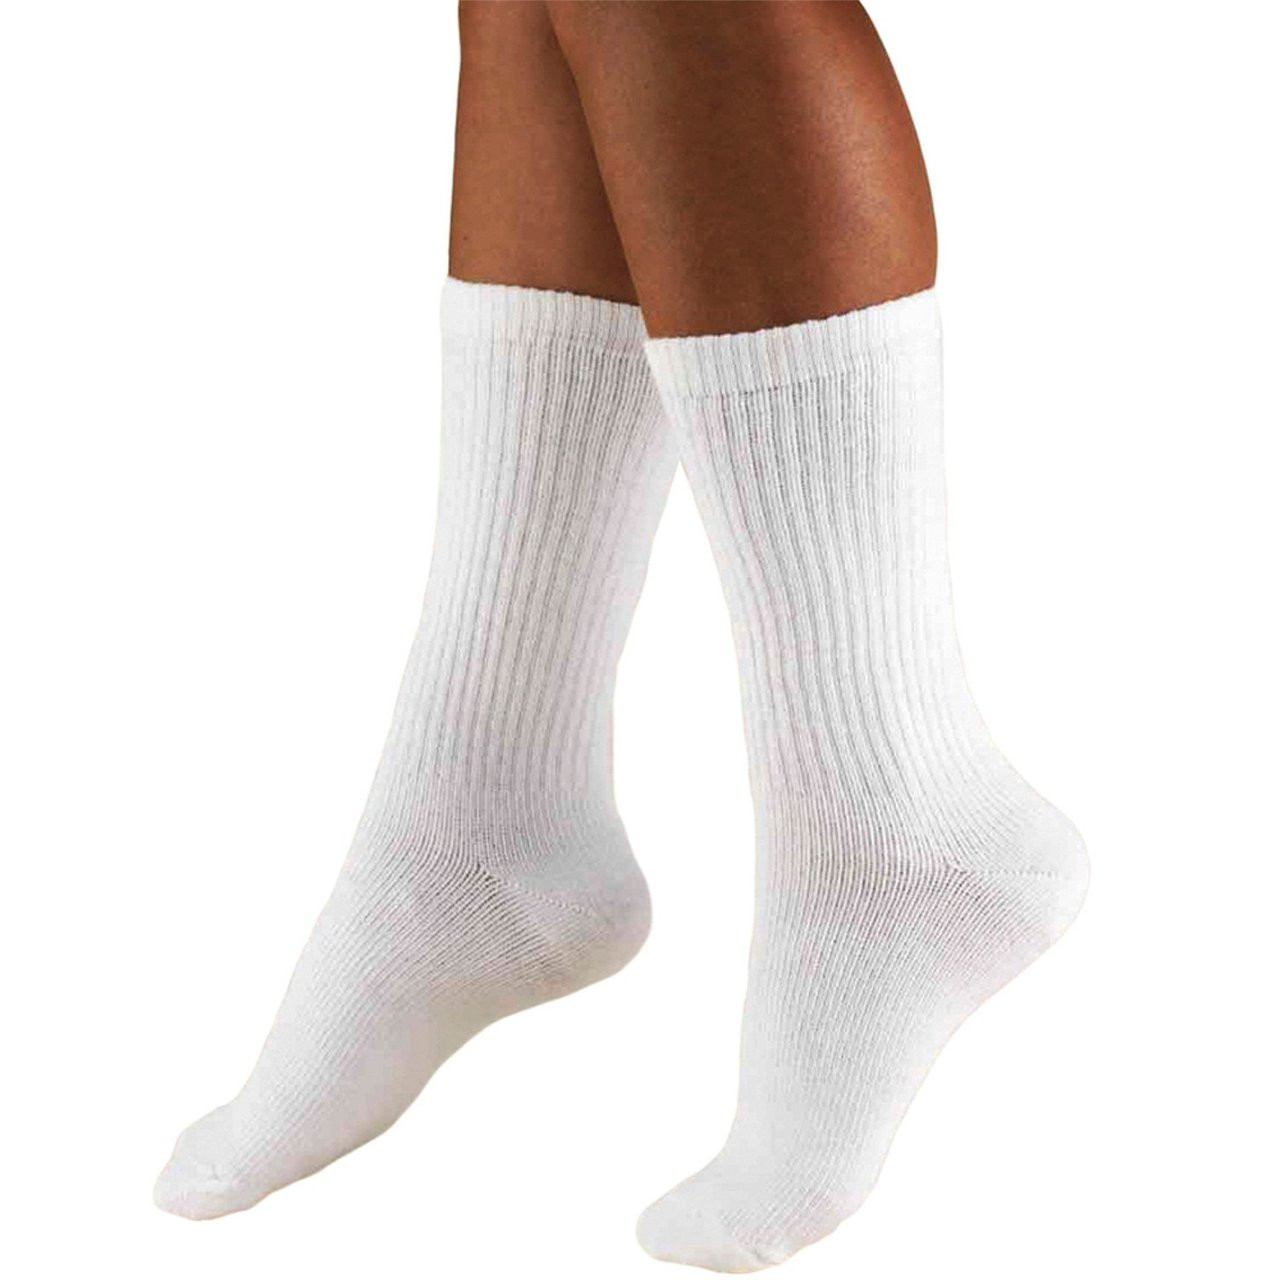 TRUFORM 1932 MEN'S CASUAL Socks 15-20mmHg Athletic Mid-calf socks, white S-M-L-XL